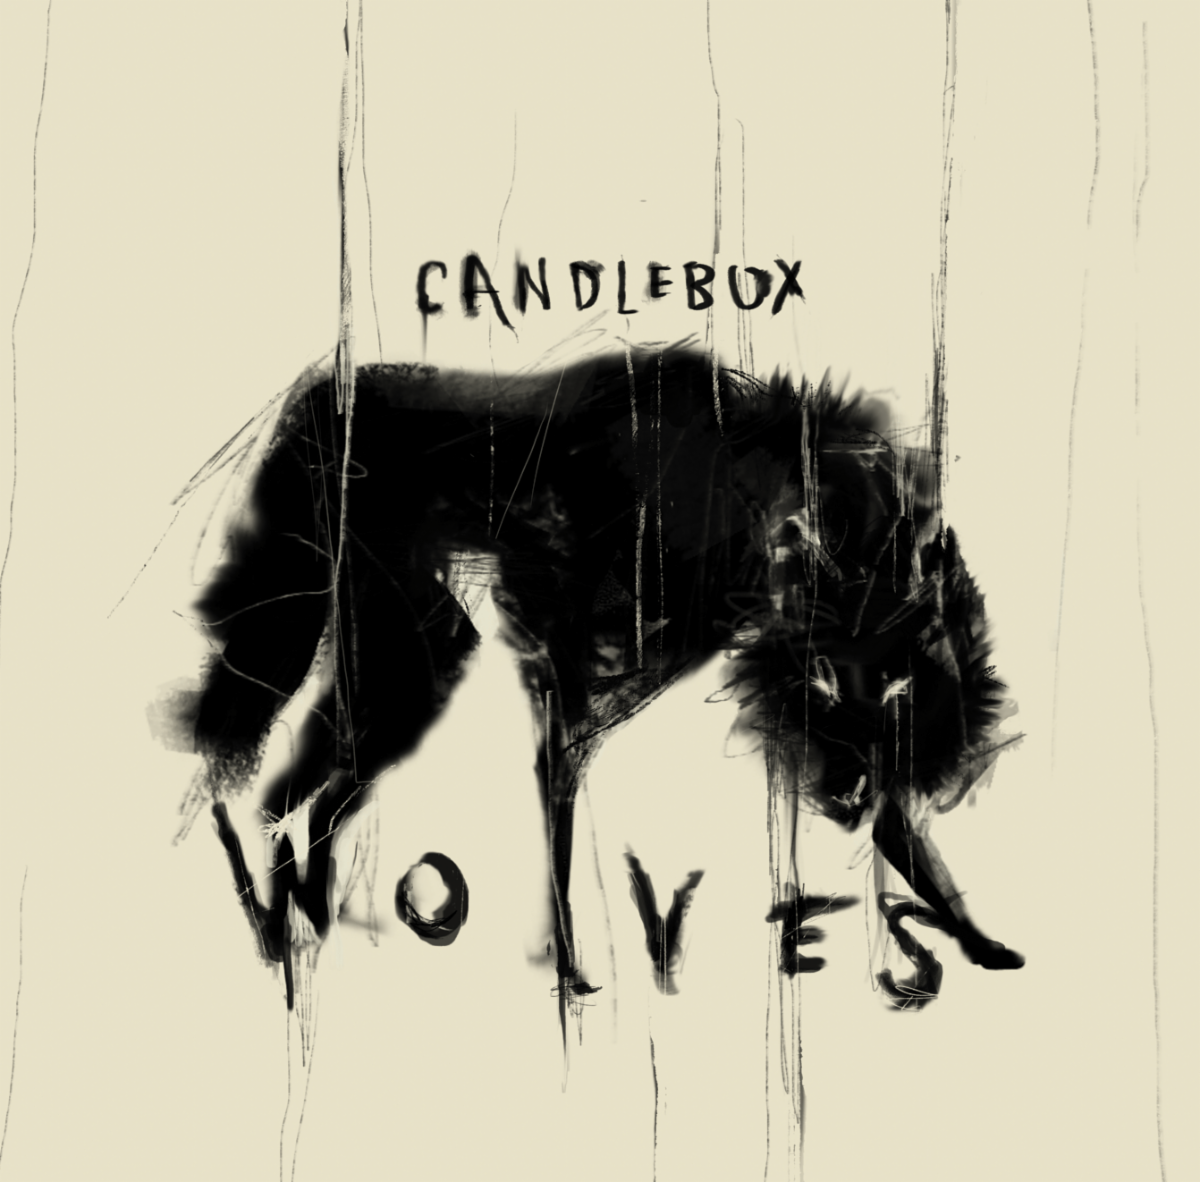 Candlebox Announces US Tour & New Album